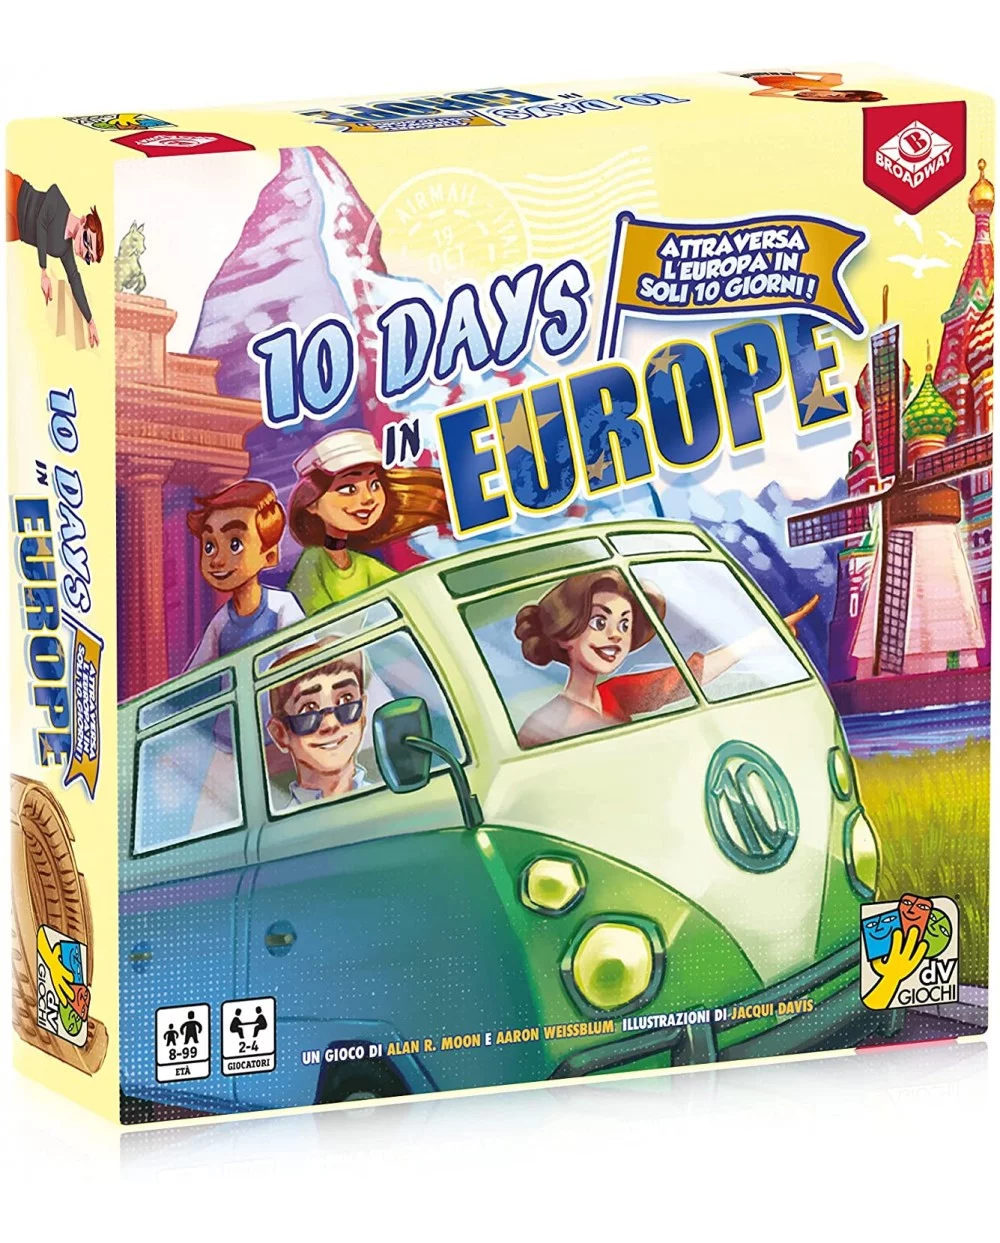 10 days in Europe DV giochi